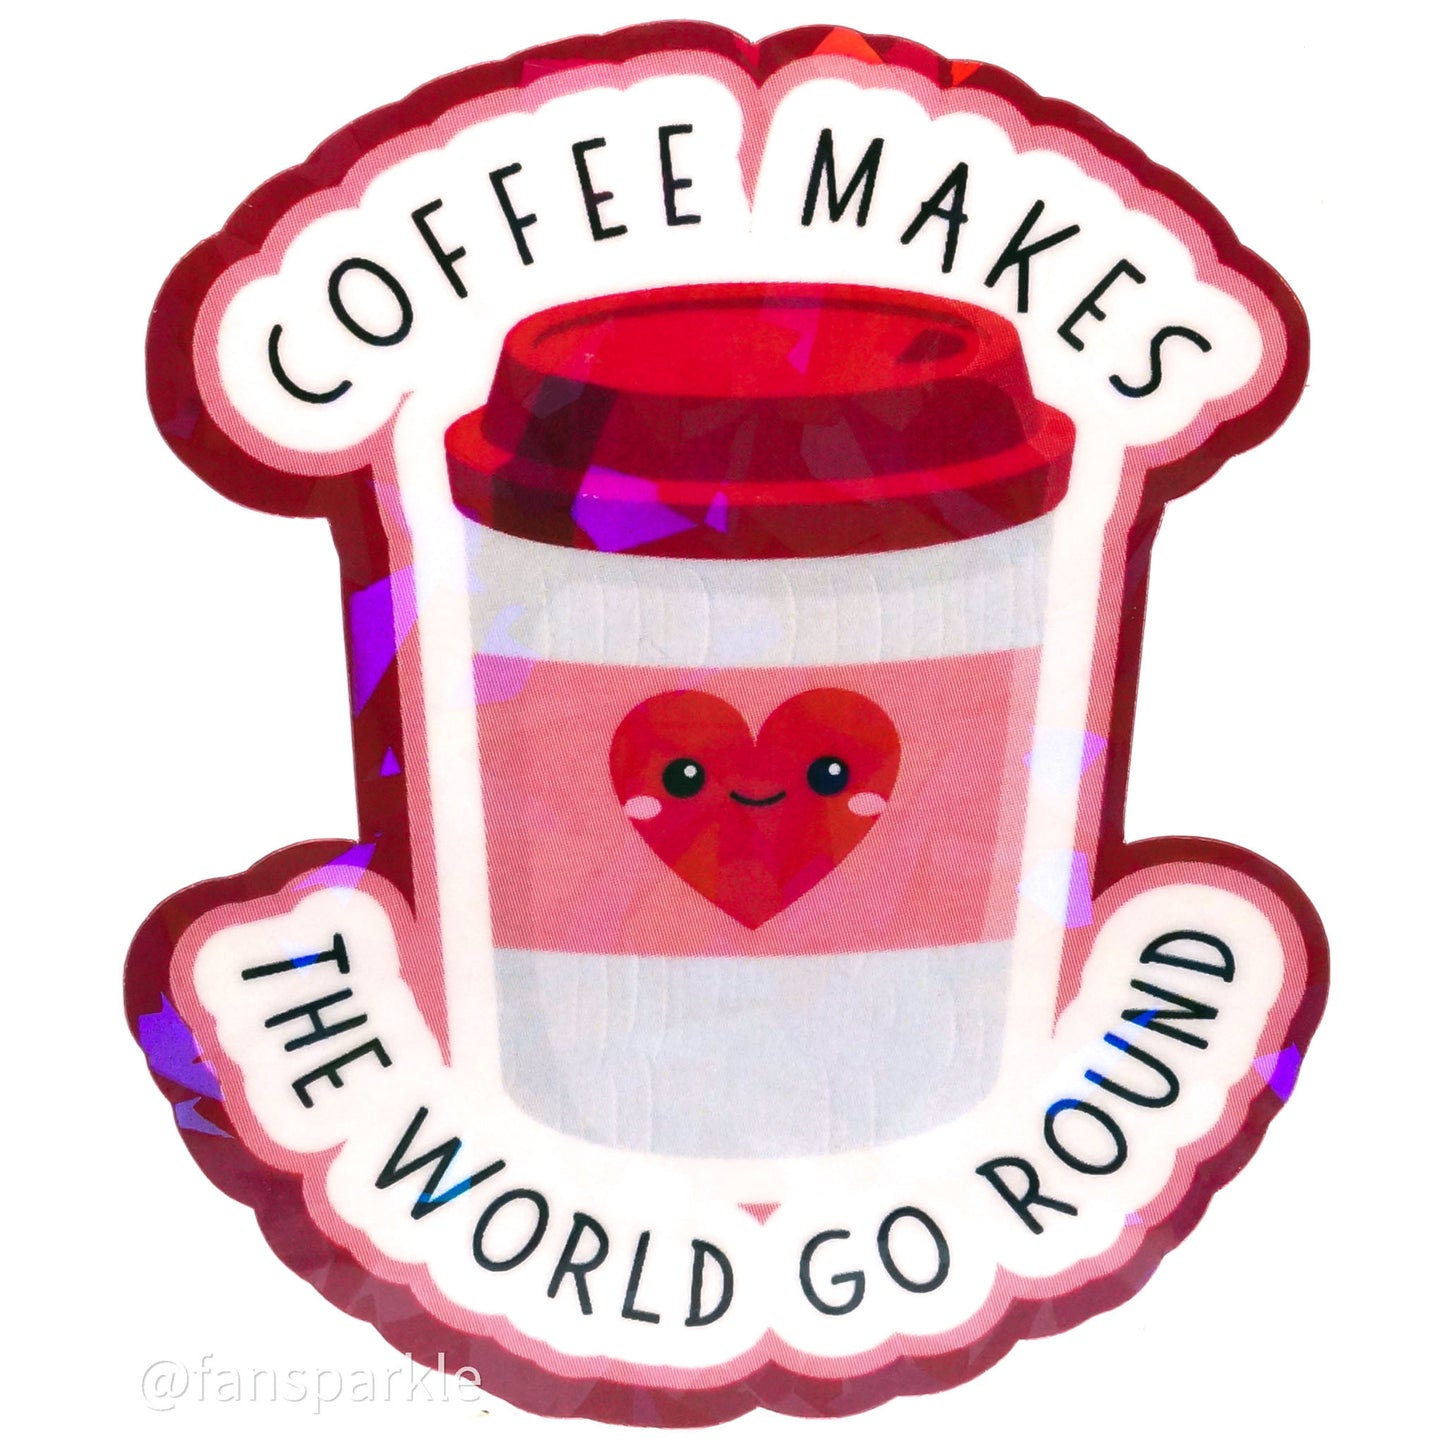 Coffee Makes The World Go Round Sticker - Fan Sparkle